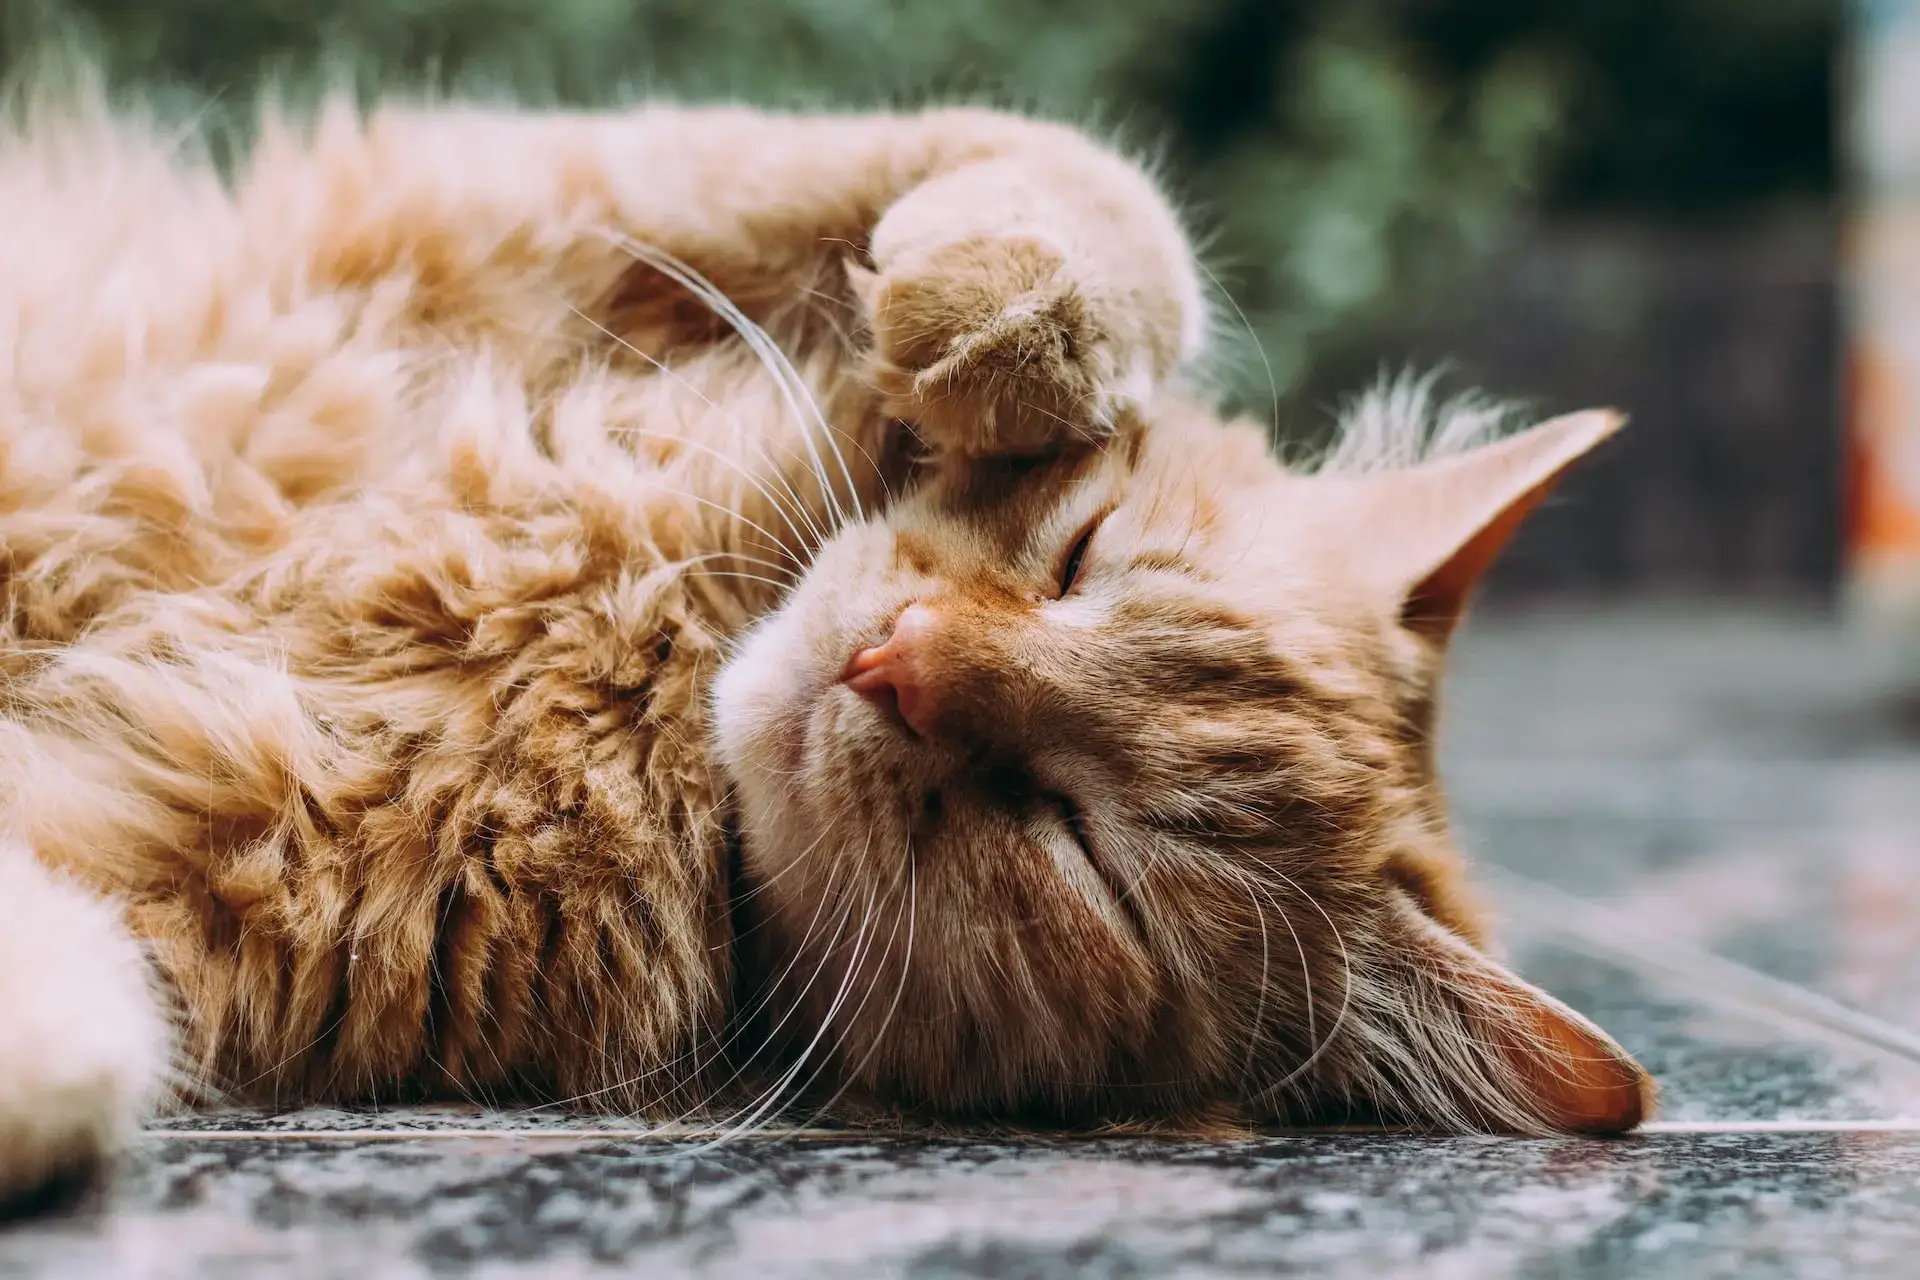 Orange cat lying down